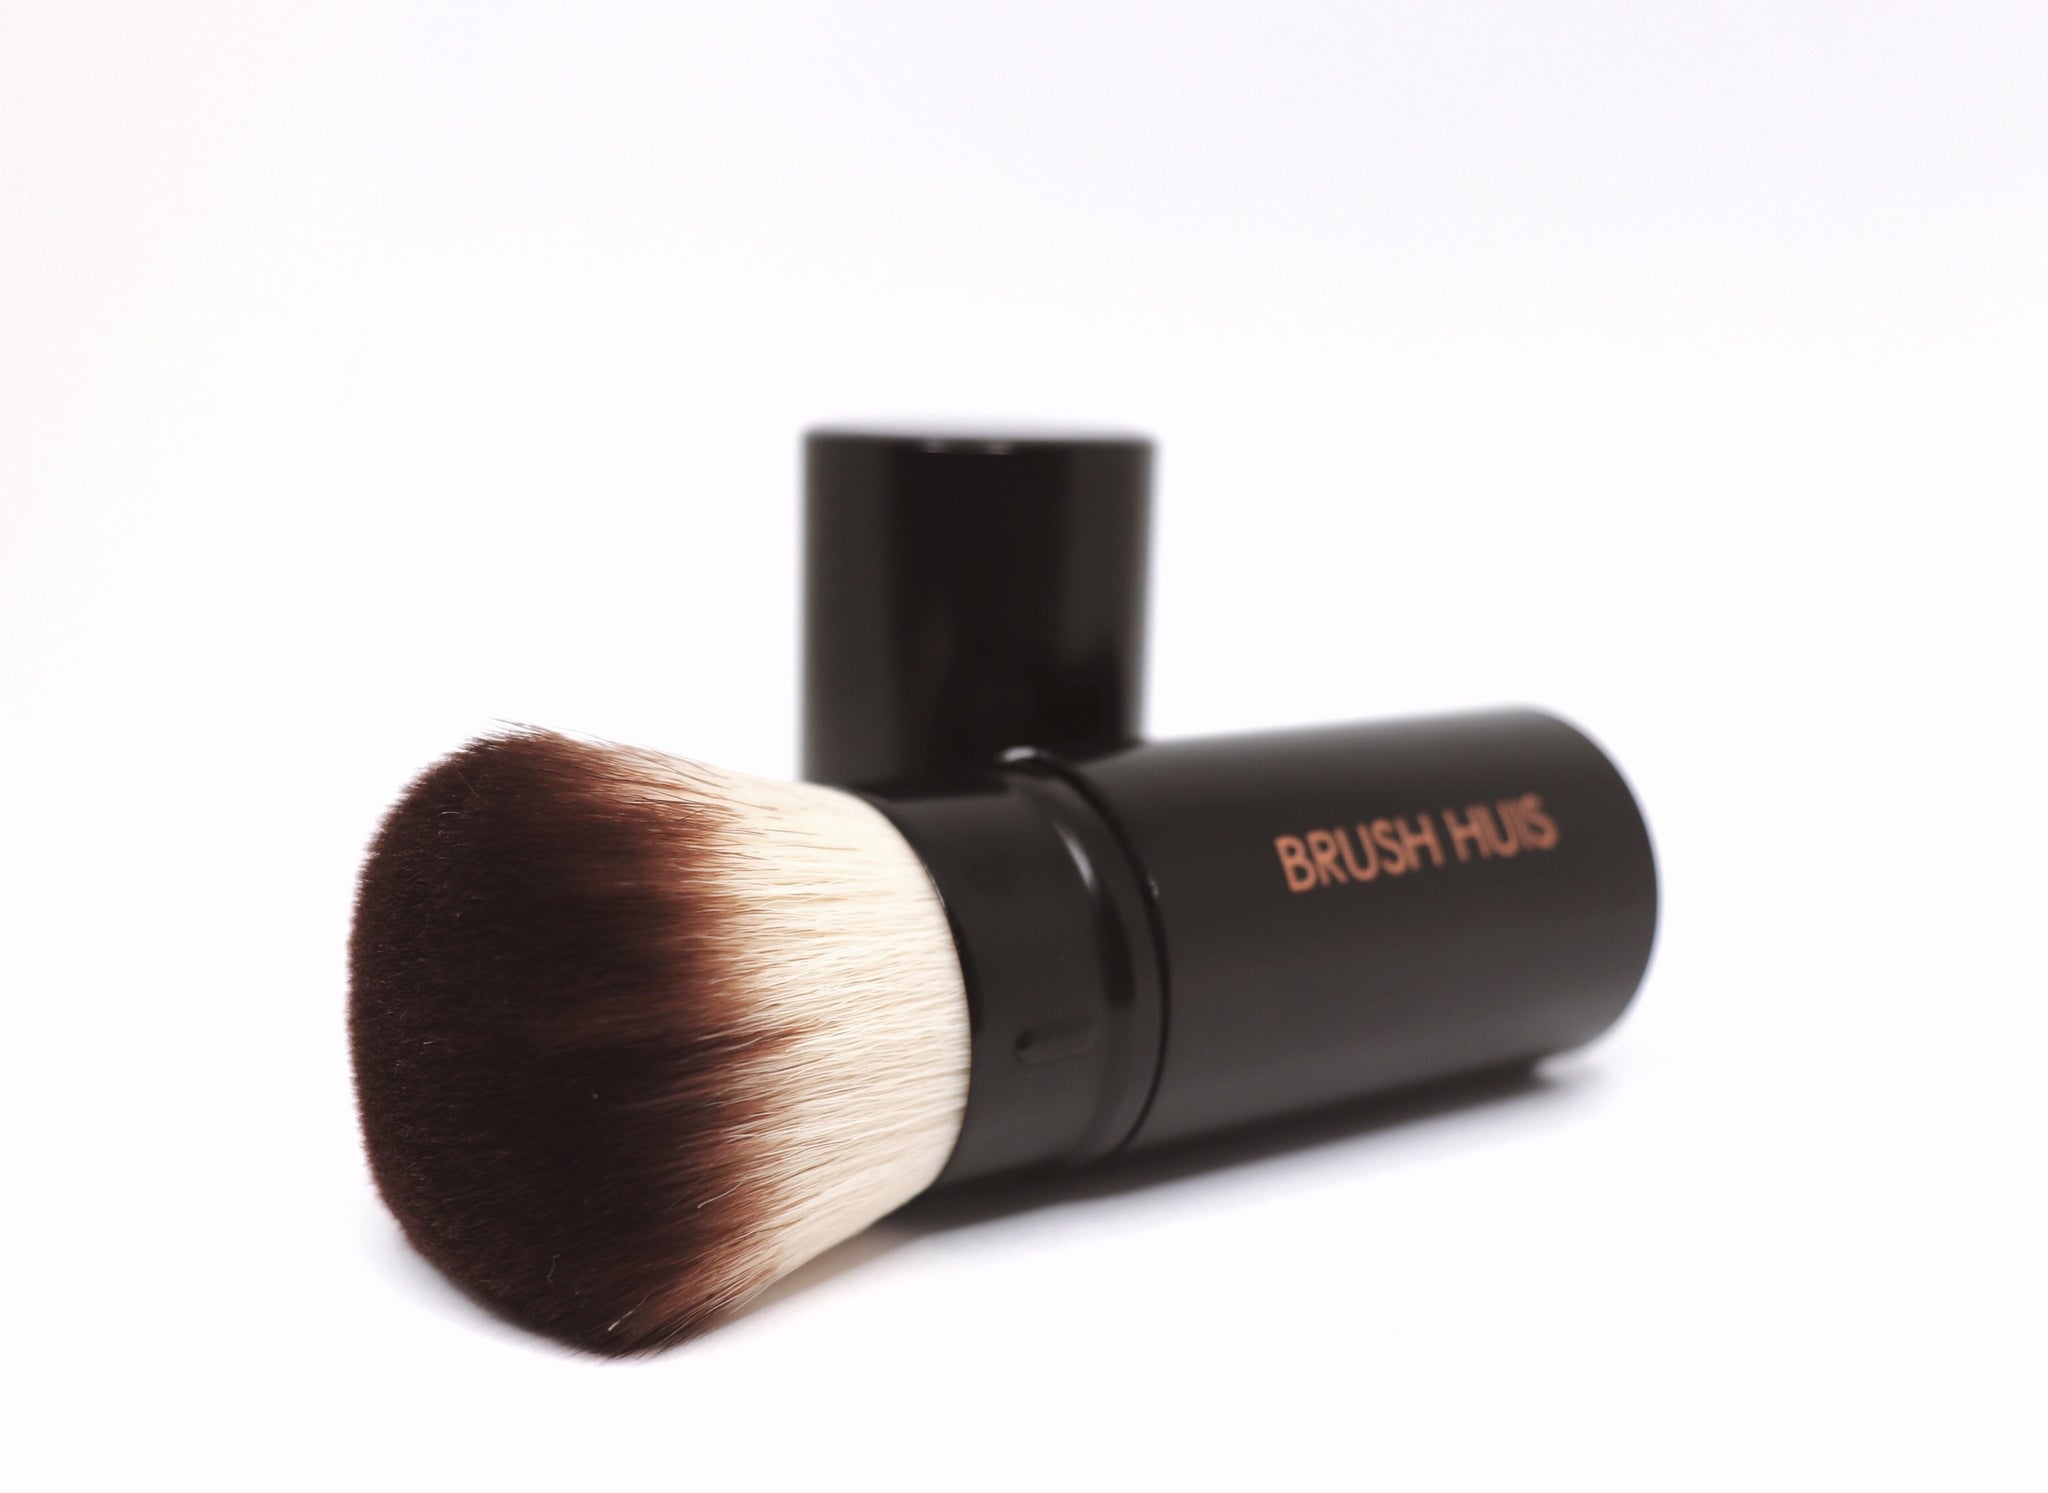 High quality affordable kabuki makeup brush, compact with a lid to keep safe in handbag.